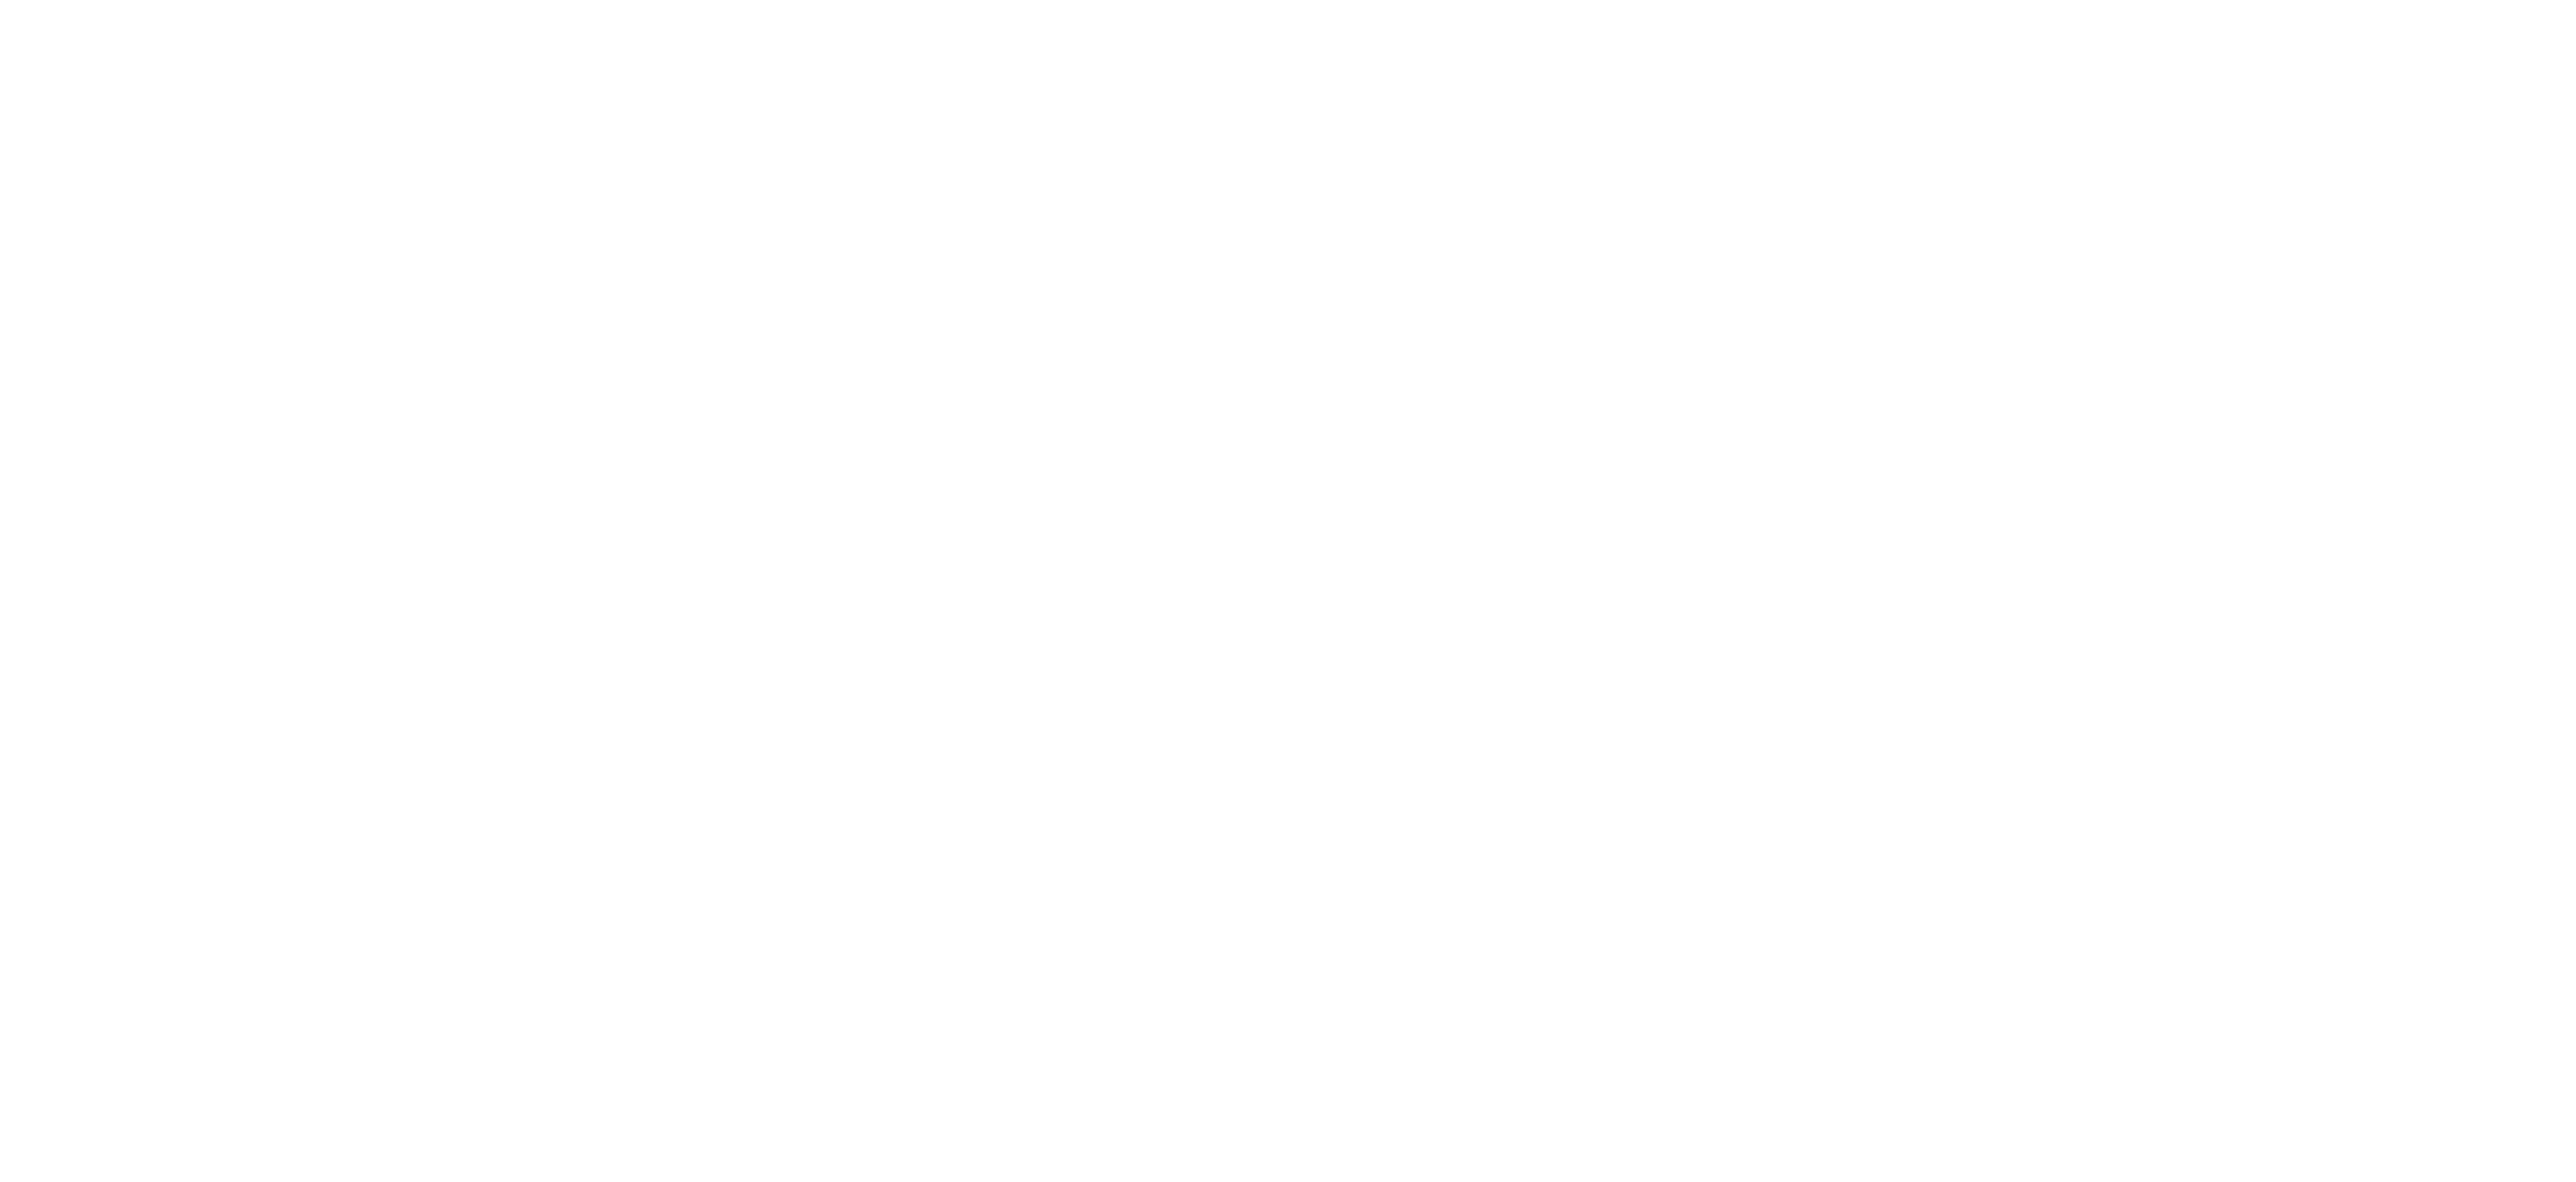 Chief Music Logo